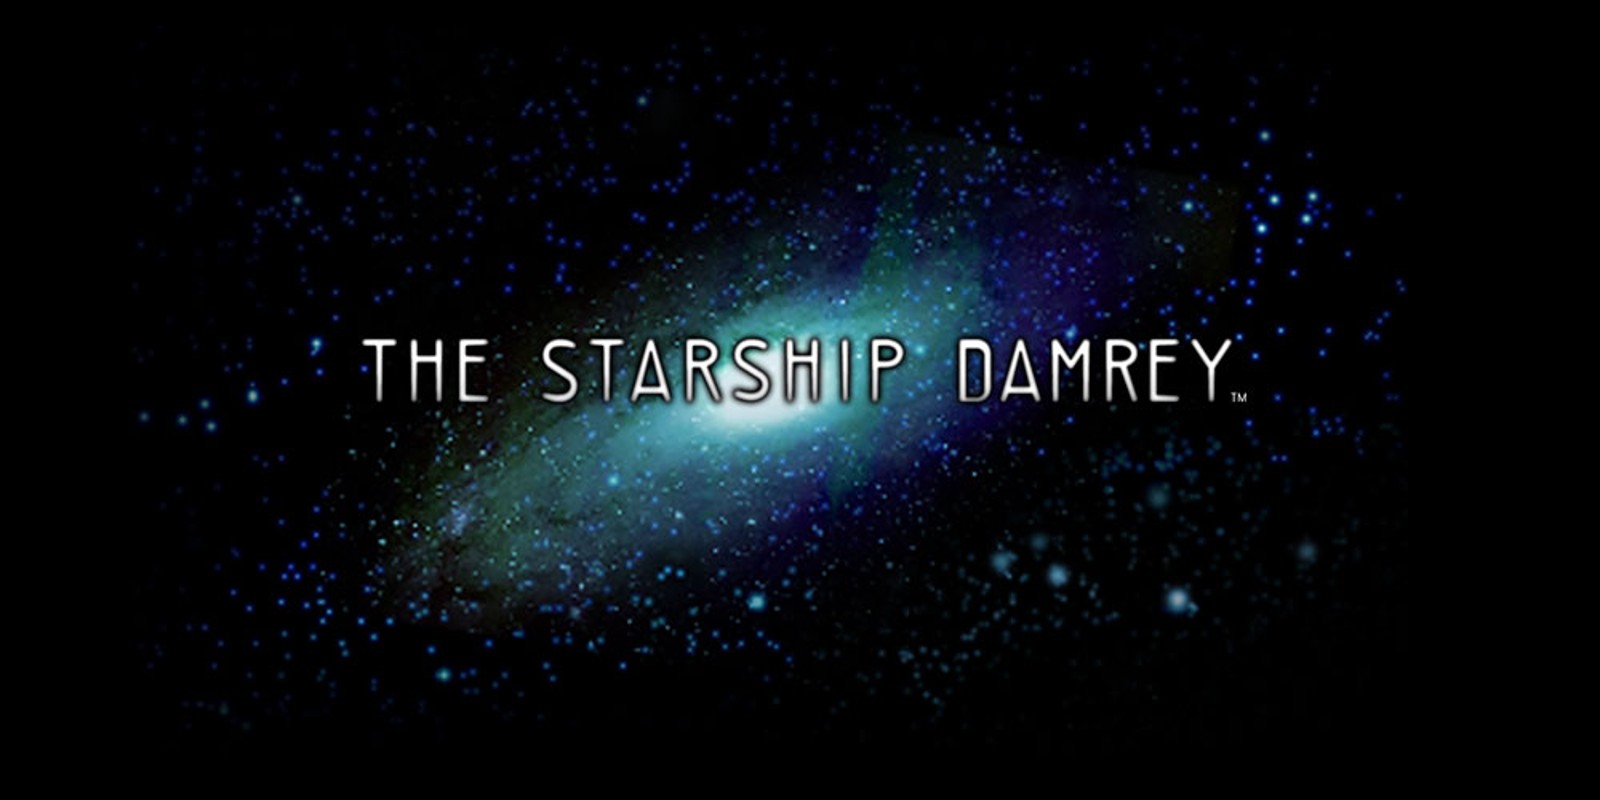 THE STARSHIP DAMREY™